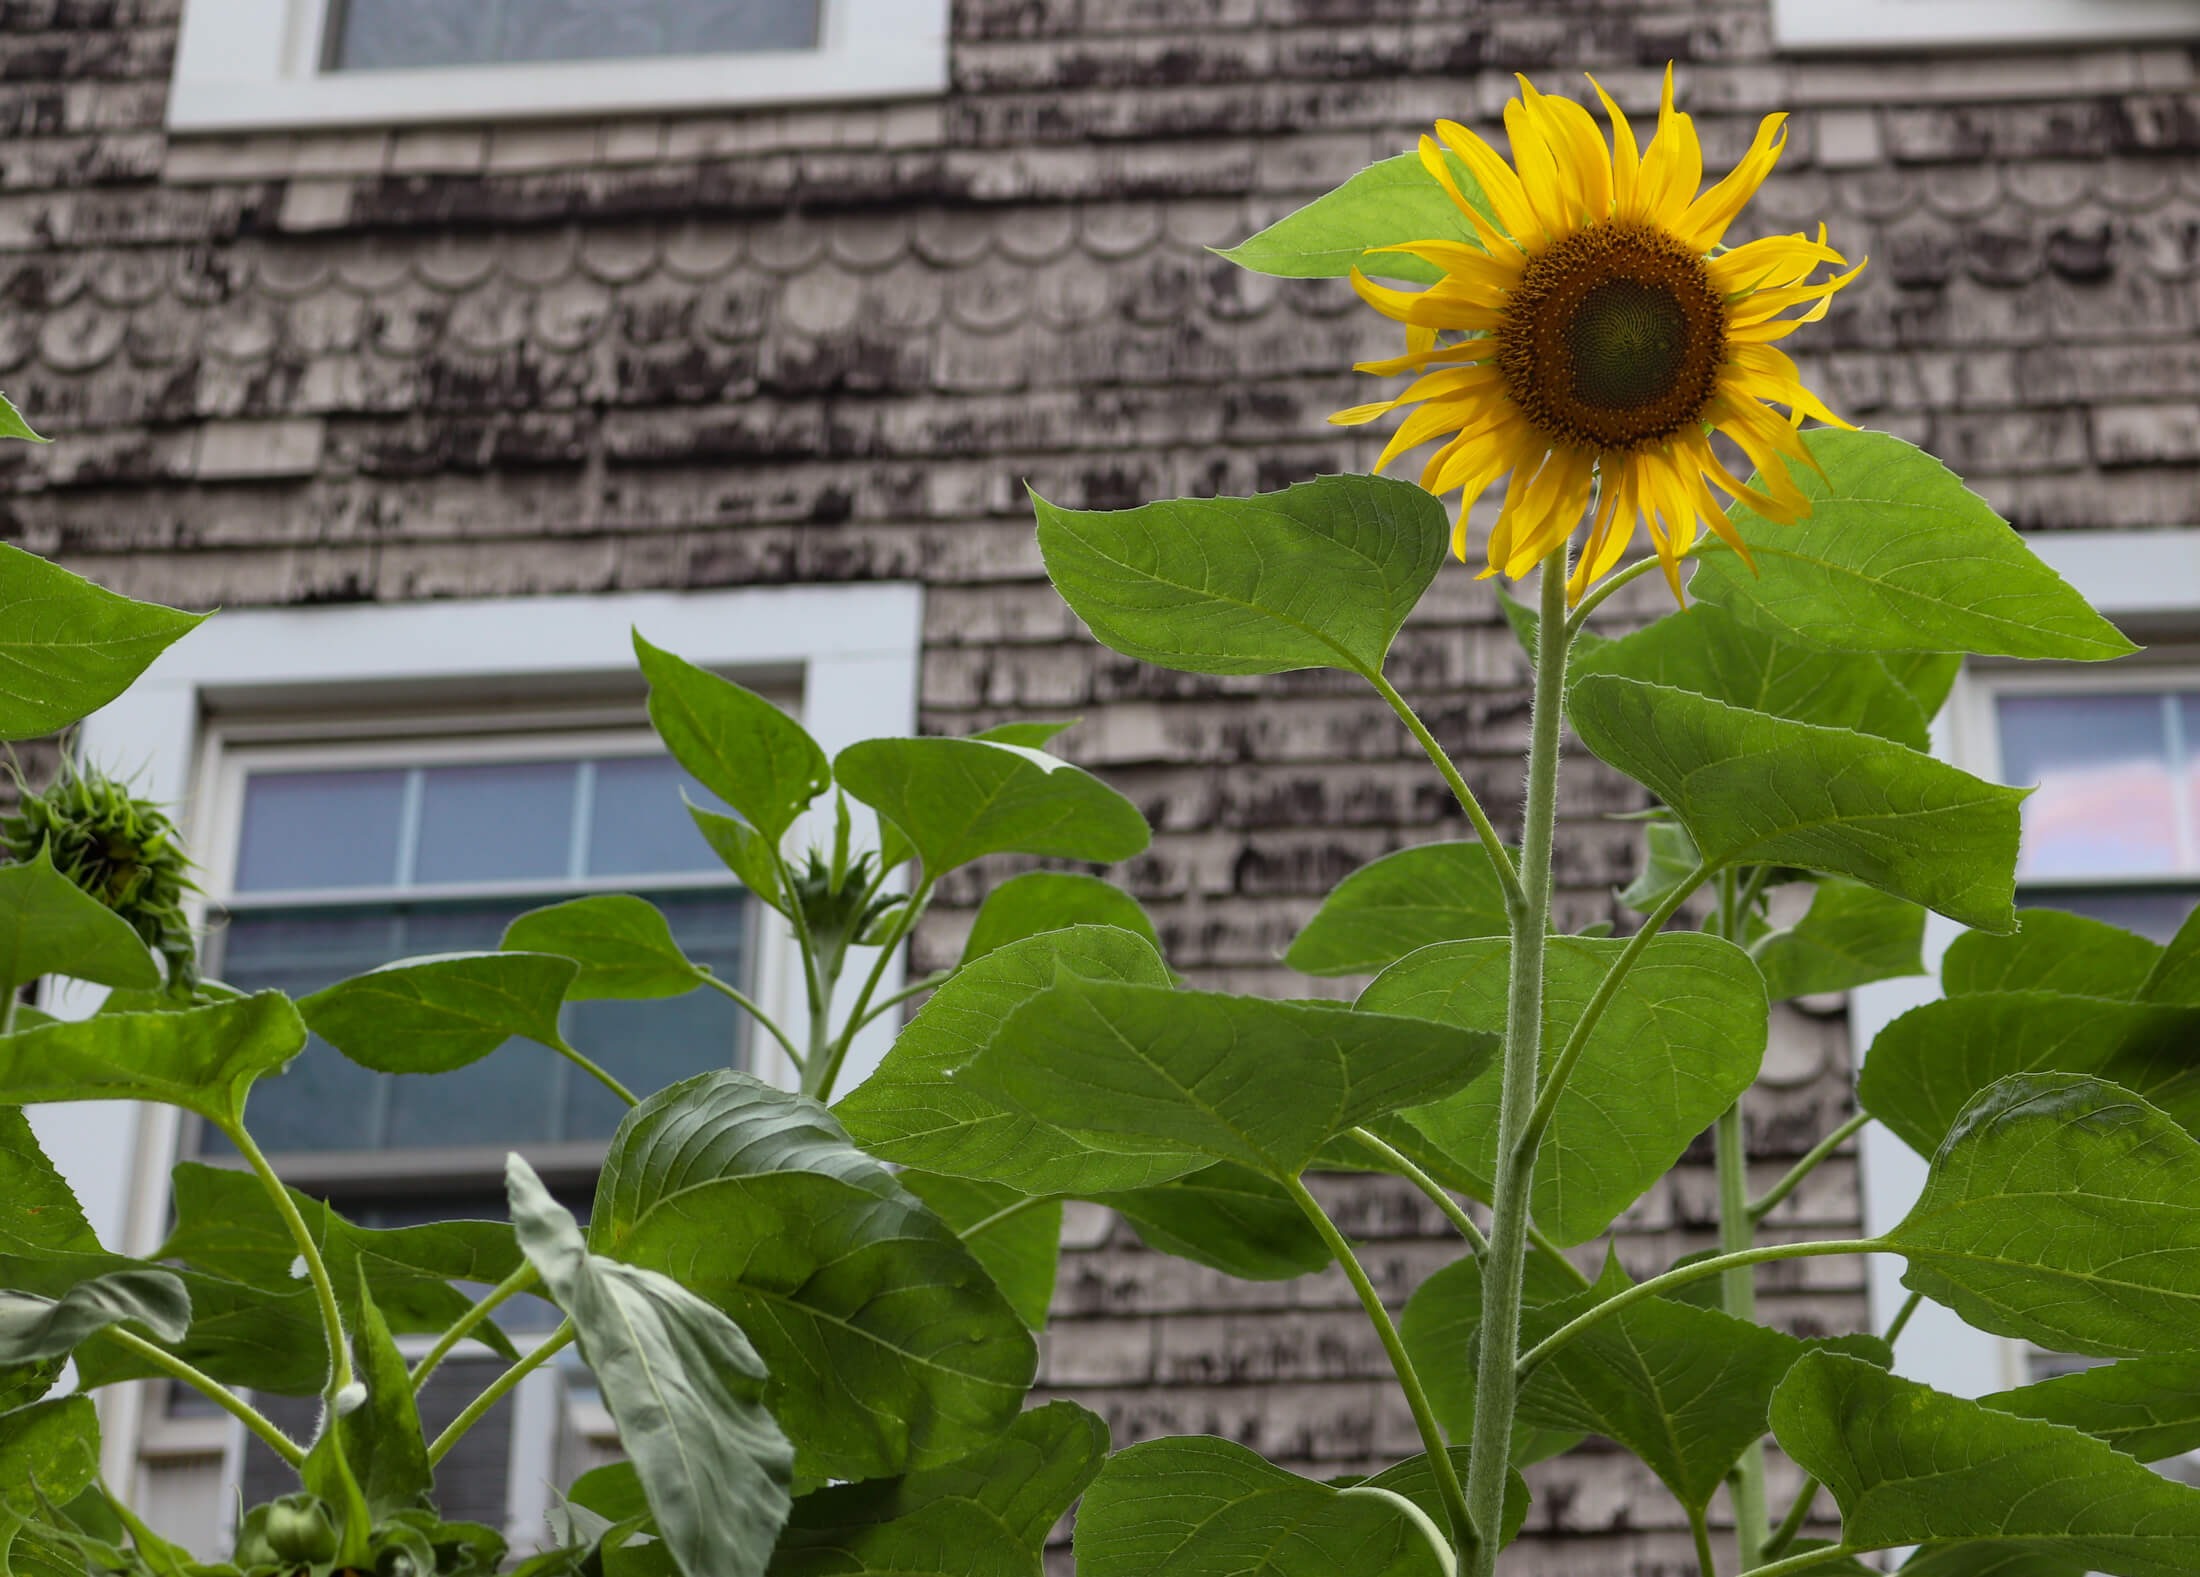 sunflowers on duffield street in bridge plaza, downtown brooklyn